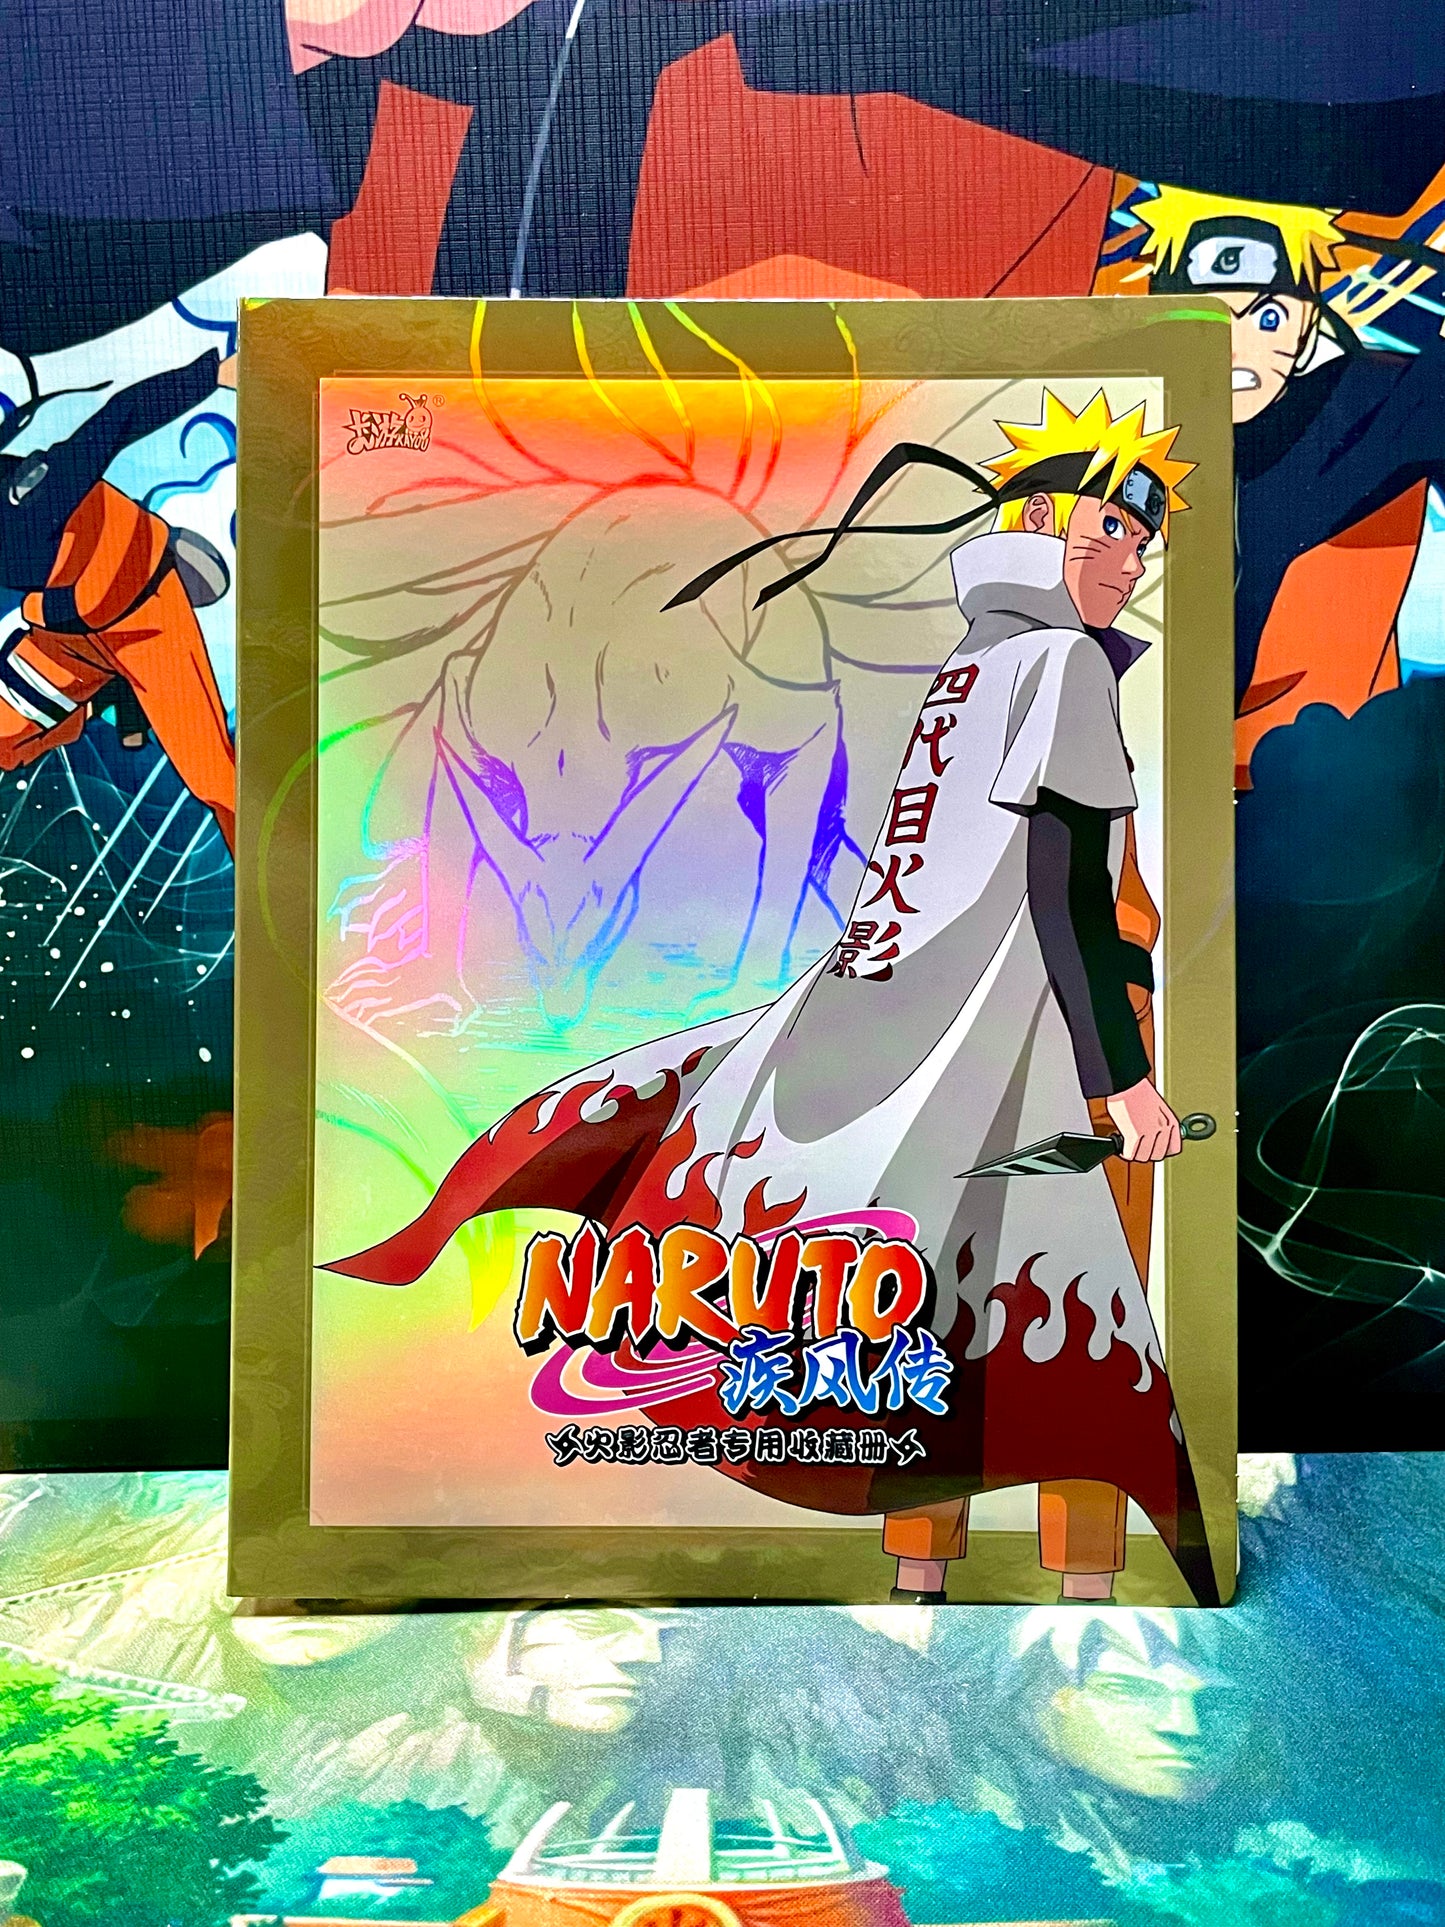 Naruto chegou ao FIM! - Blast